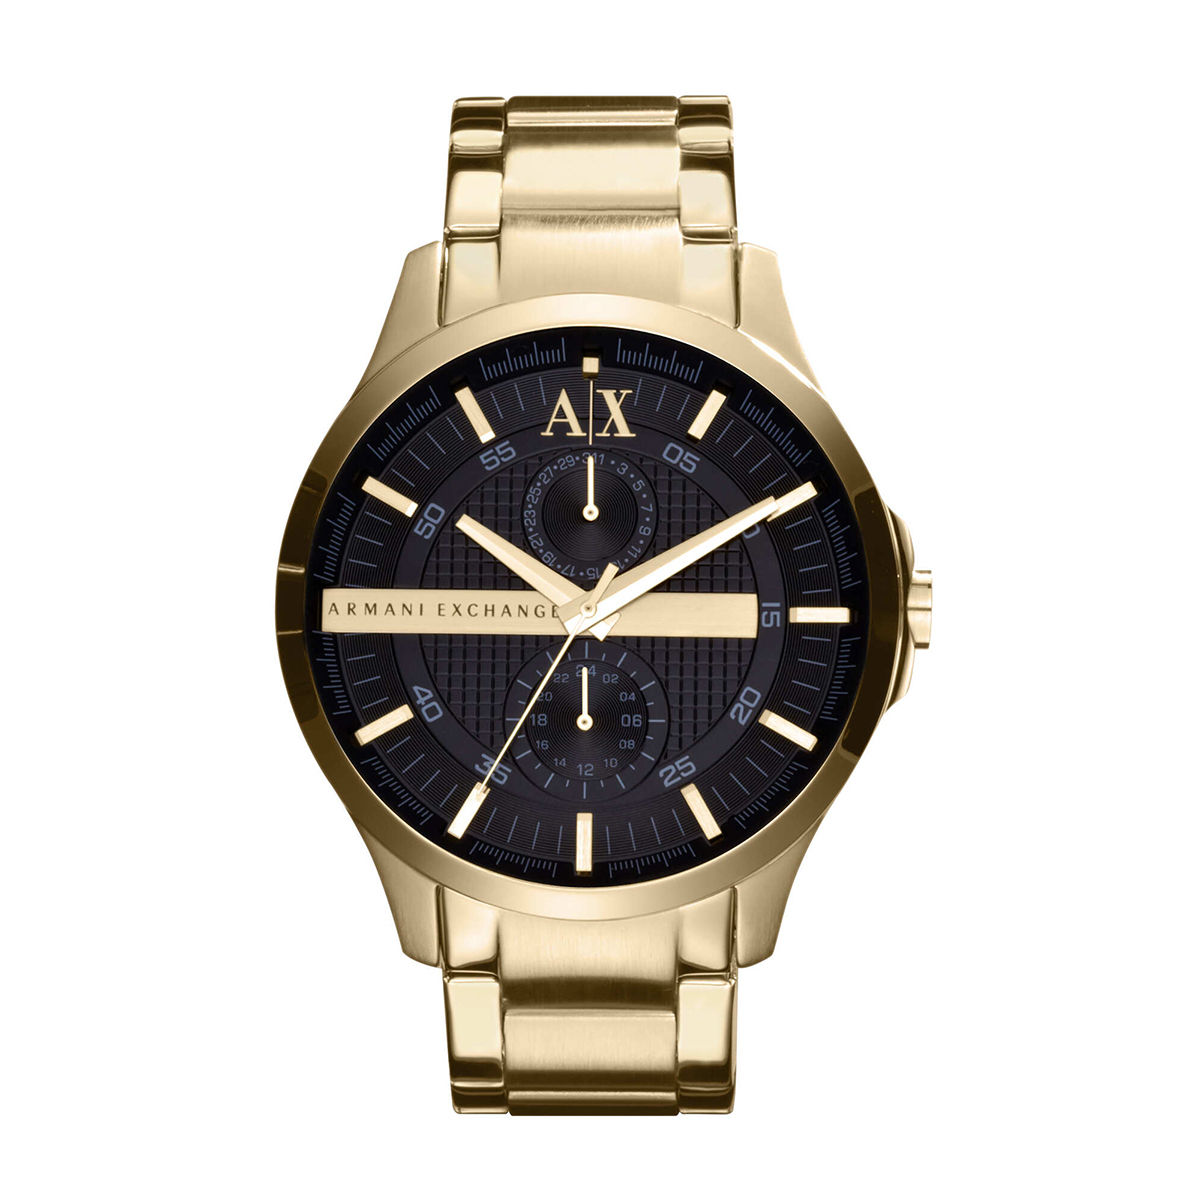 Buy ARMANI EXCHANGE Gold Watch AX2122 (M) Online